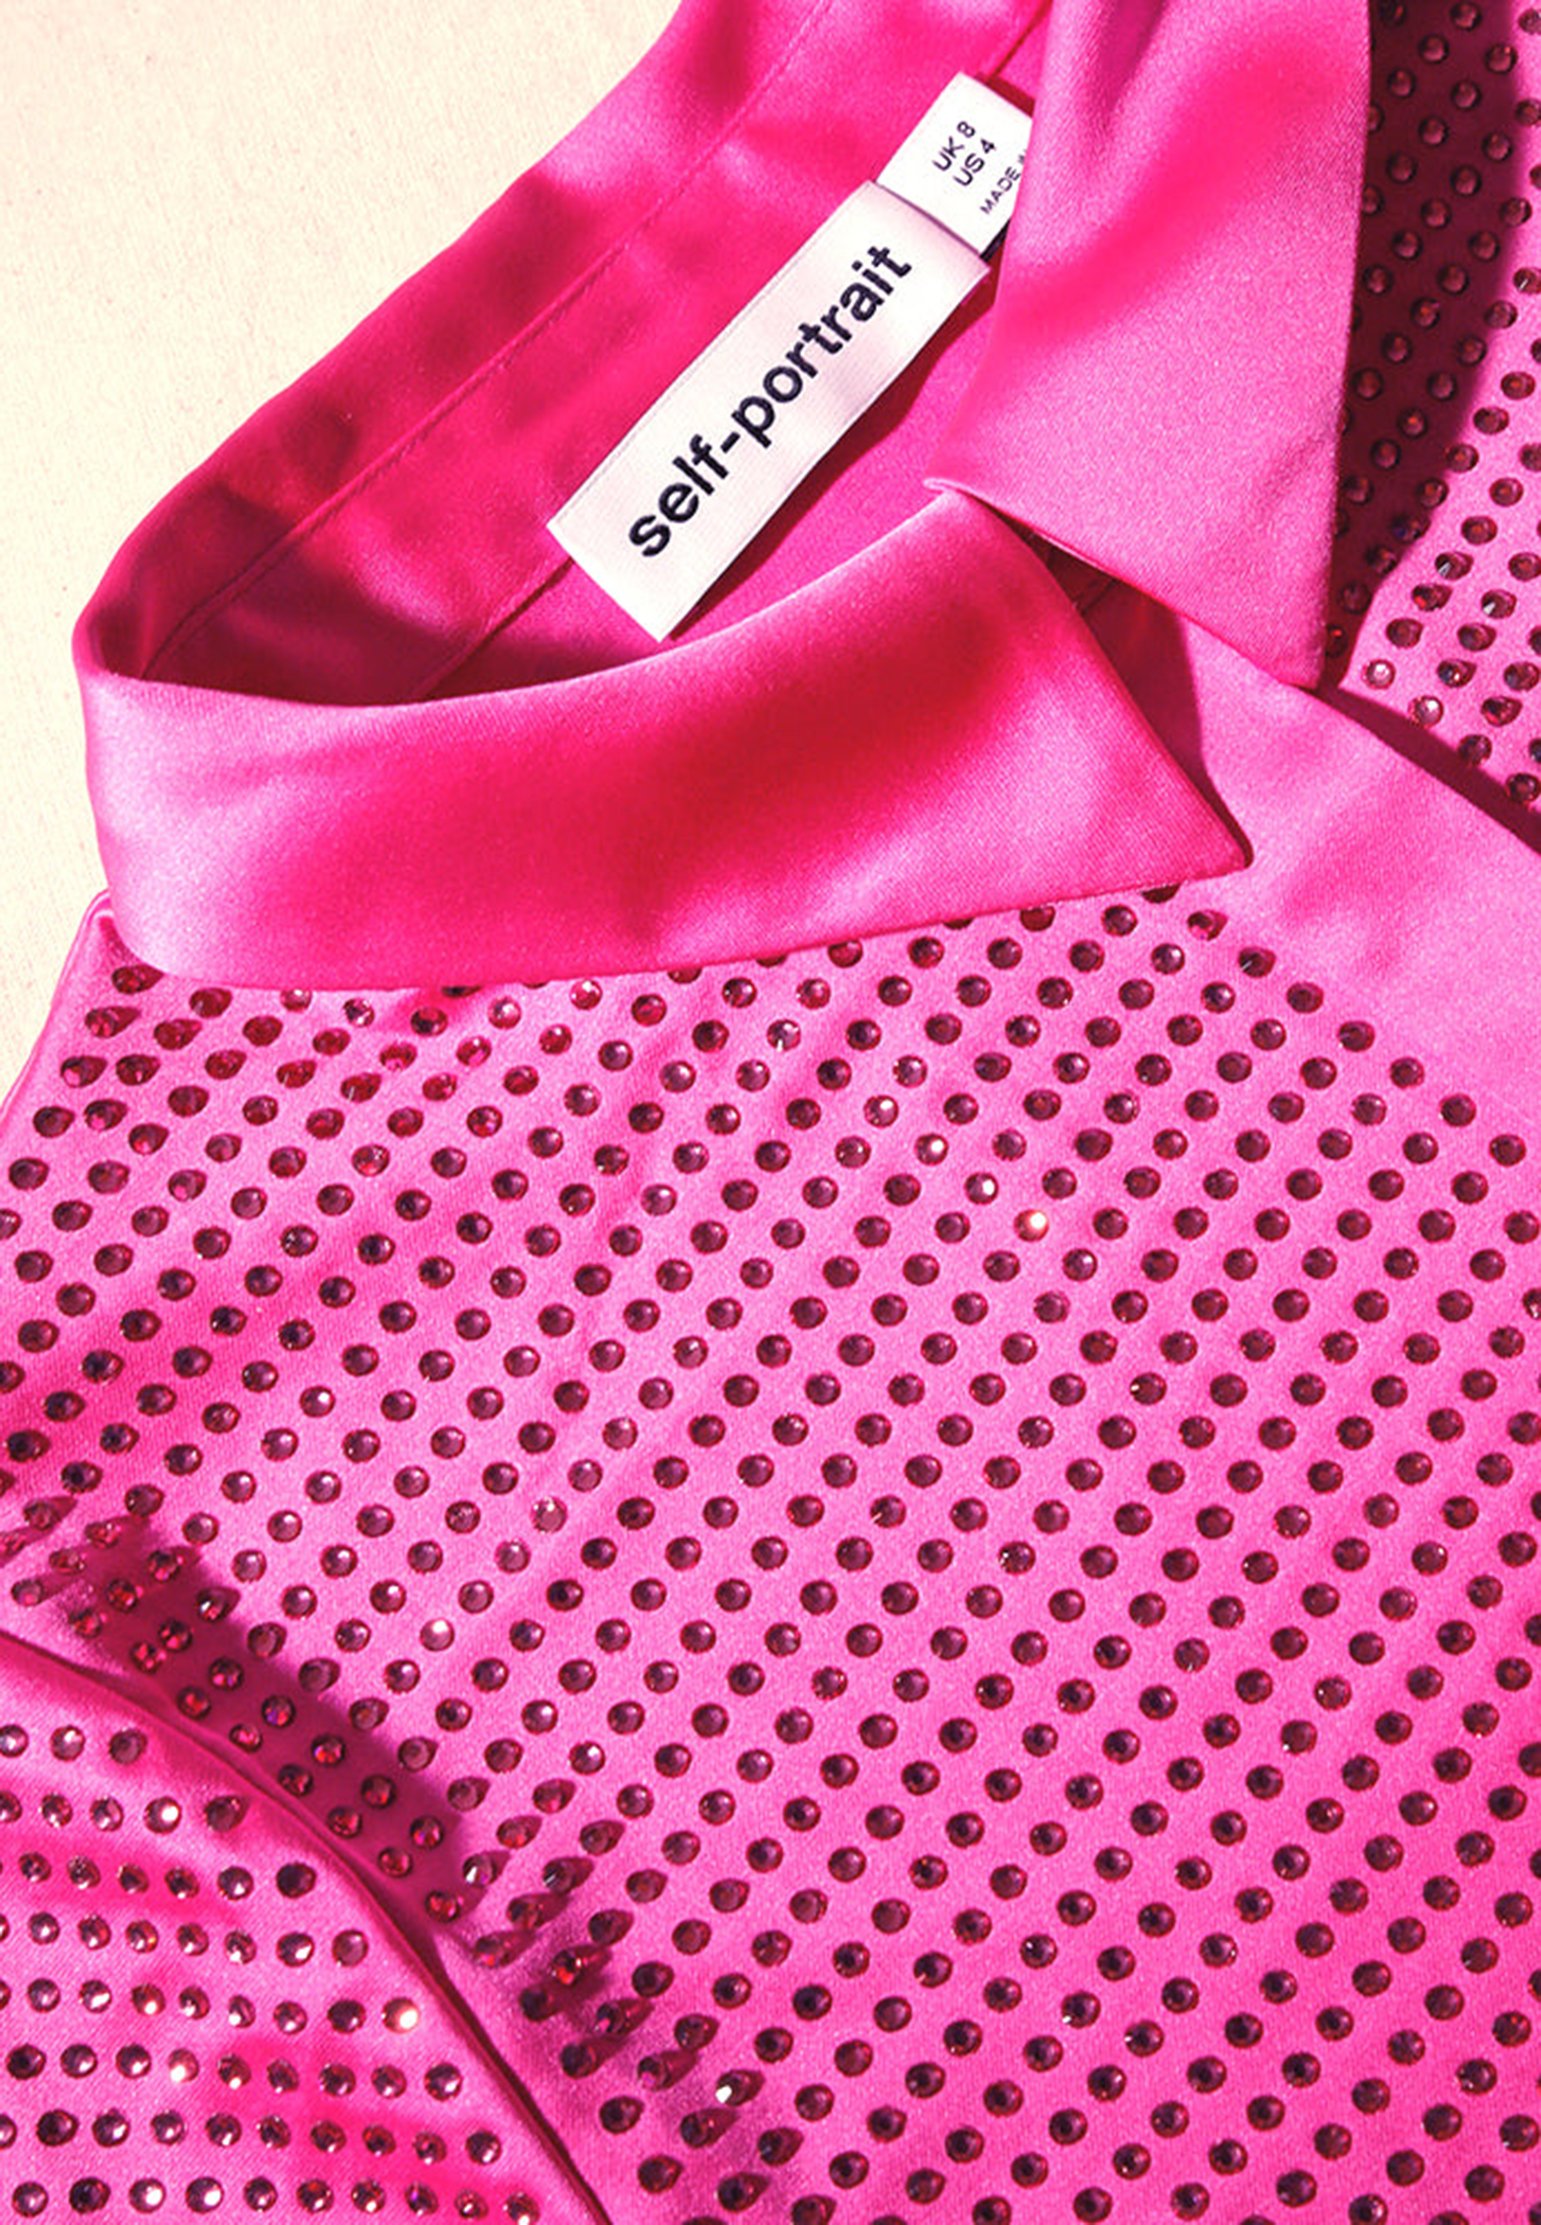 Shirt SELF-PORTRAIT Color: pink (Code: 1773) in online store Allure